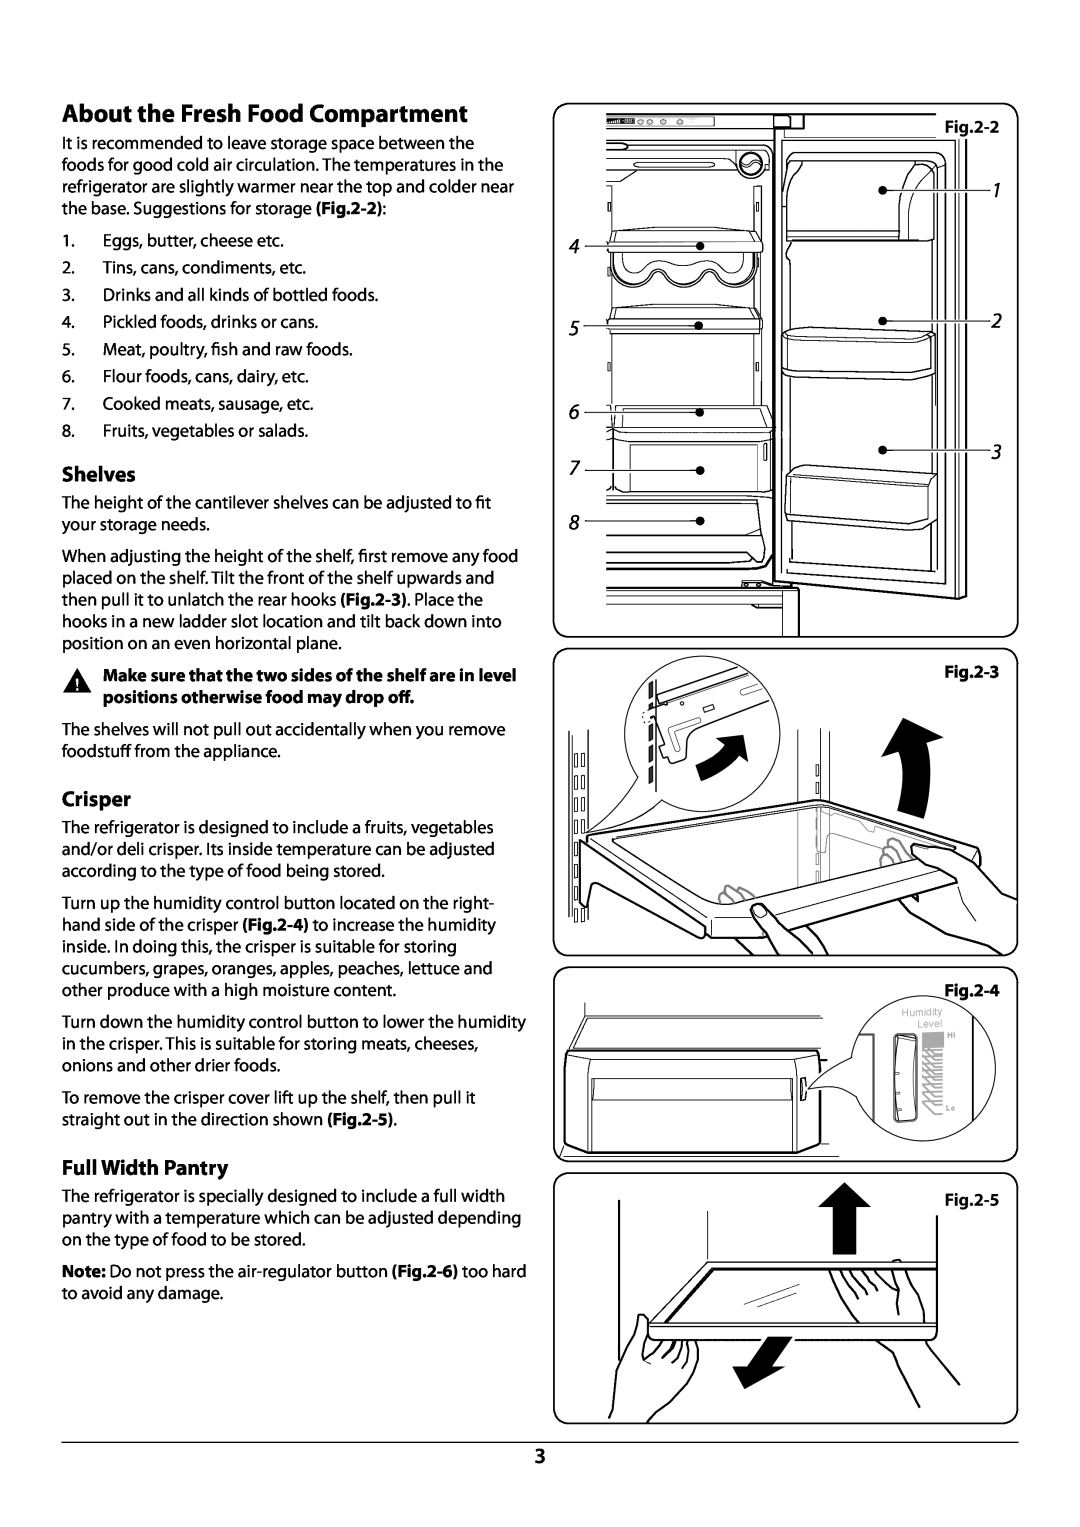 Rangemaster U109923 - 05 manual About the Fresh Food Compartment, Shelves, Crisper, Full Width Pantry, 4 